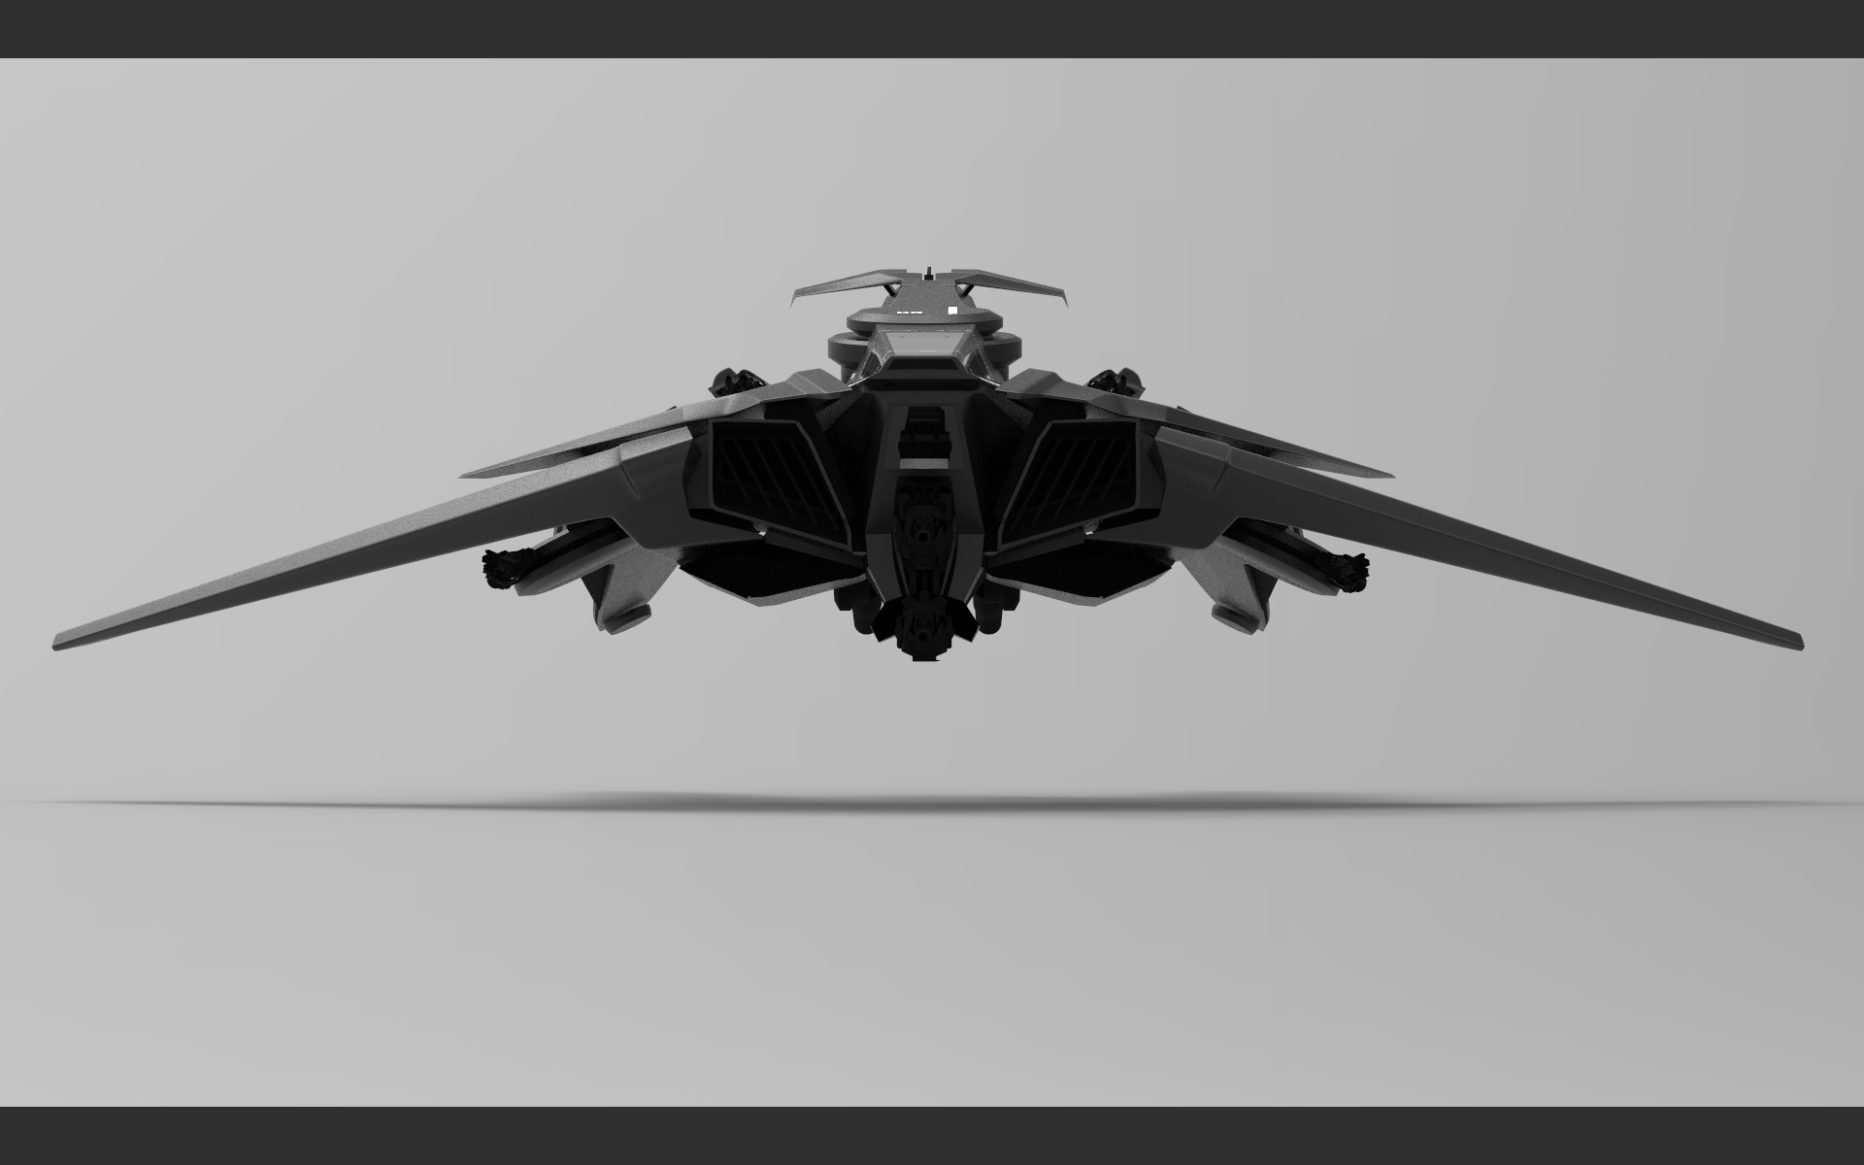 Hawk-c3-star-citizen-3.jpg